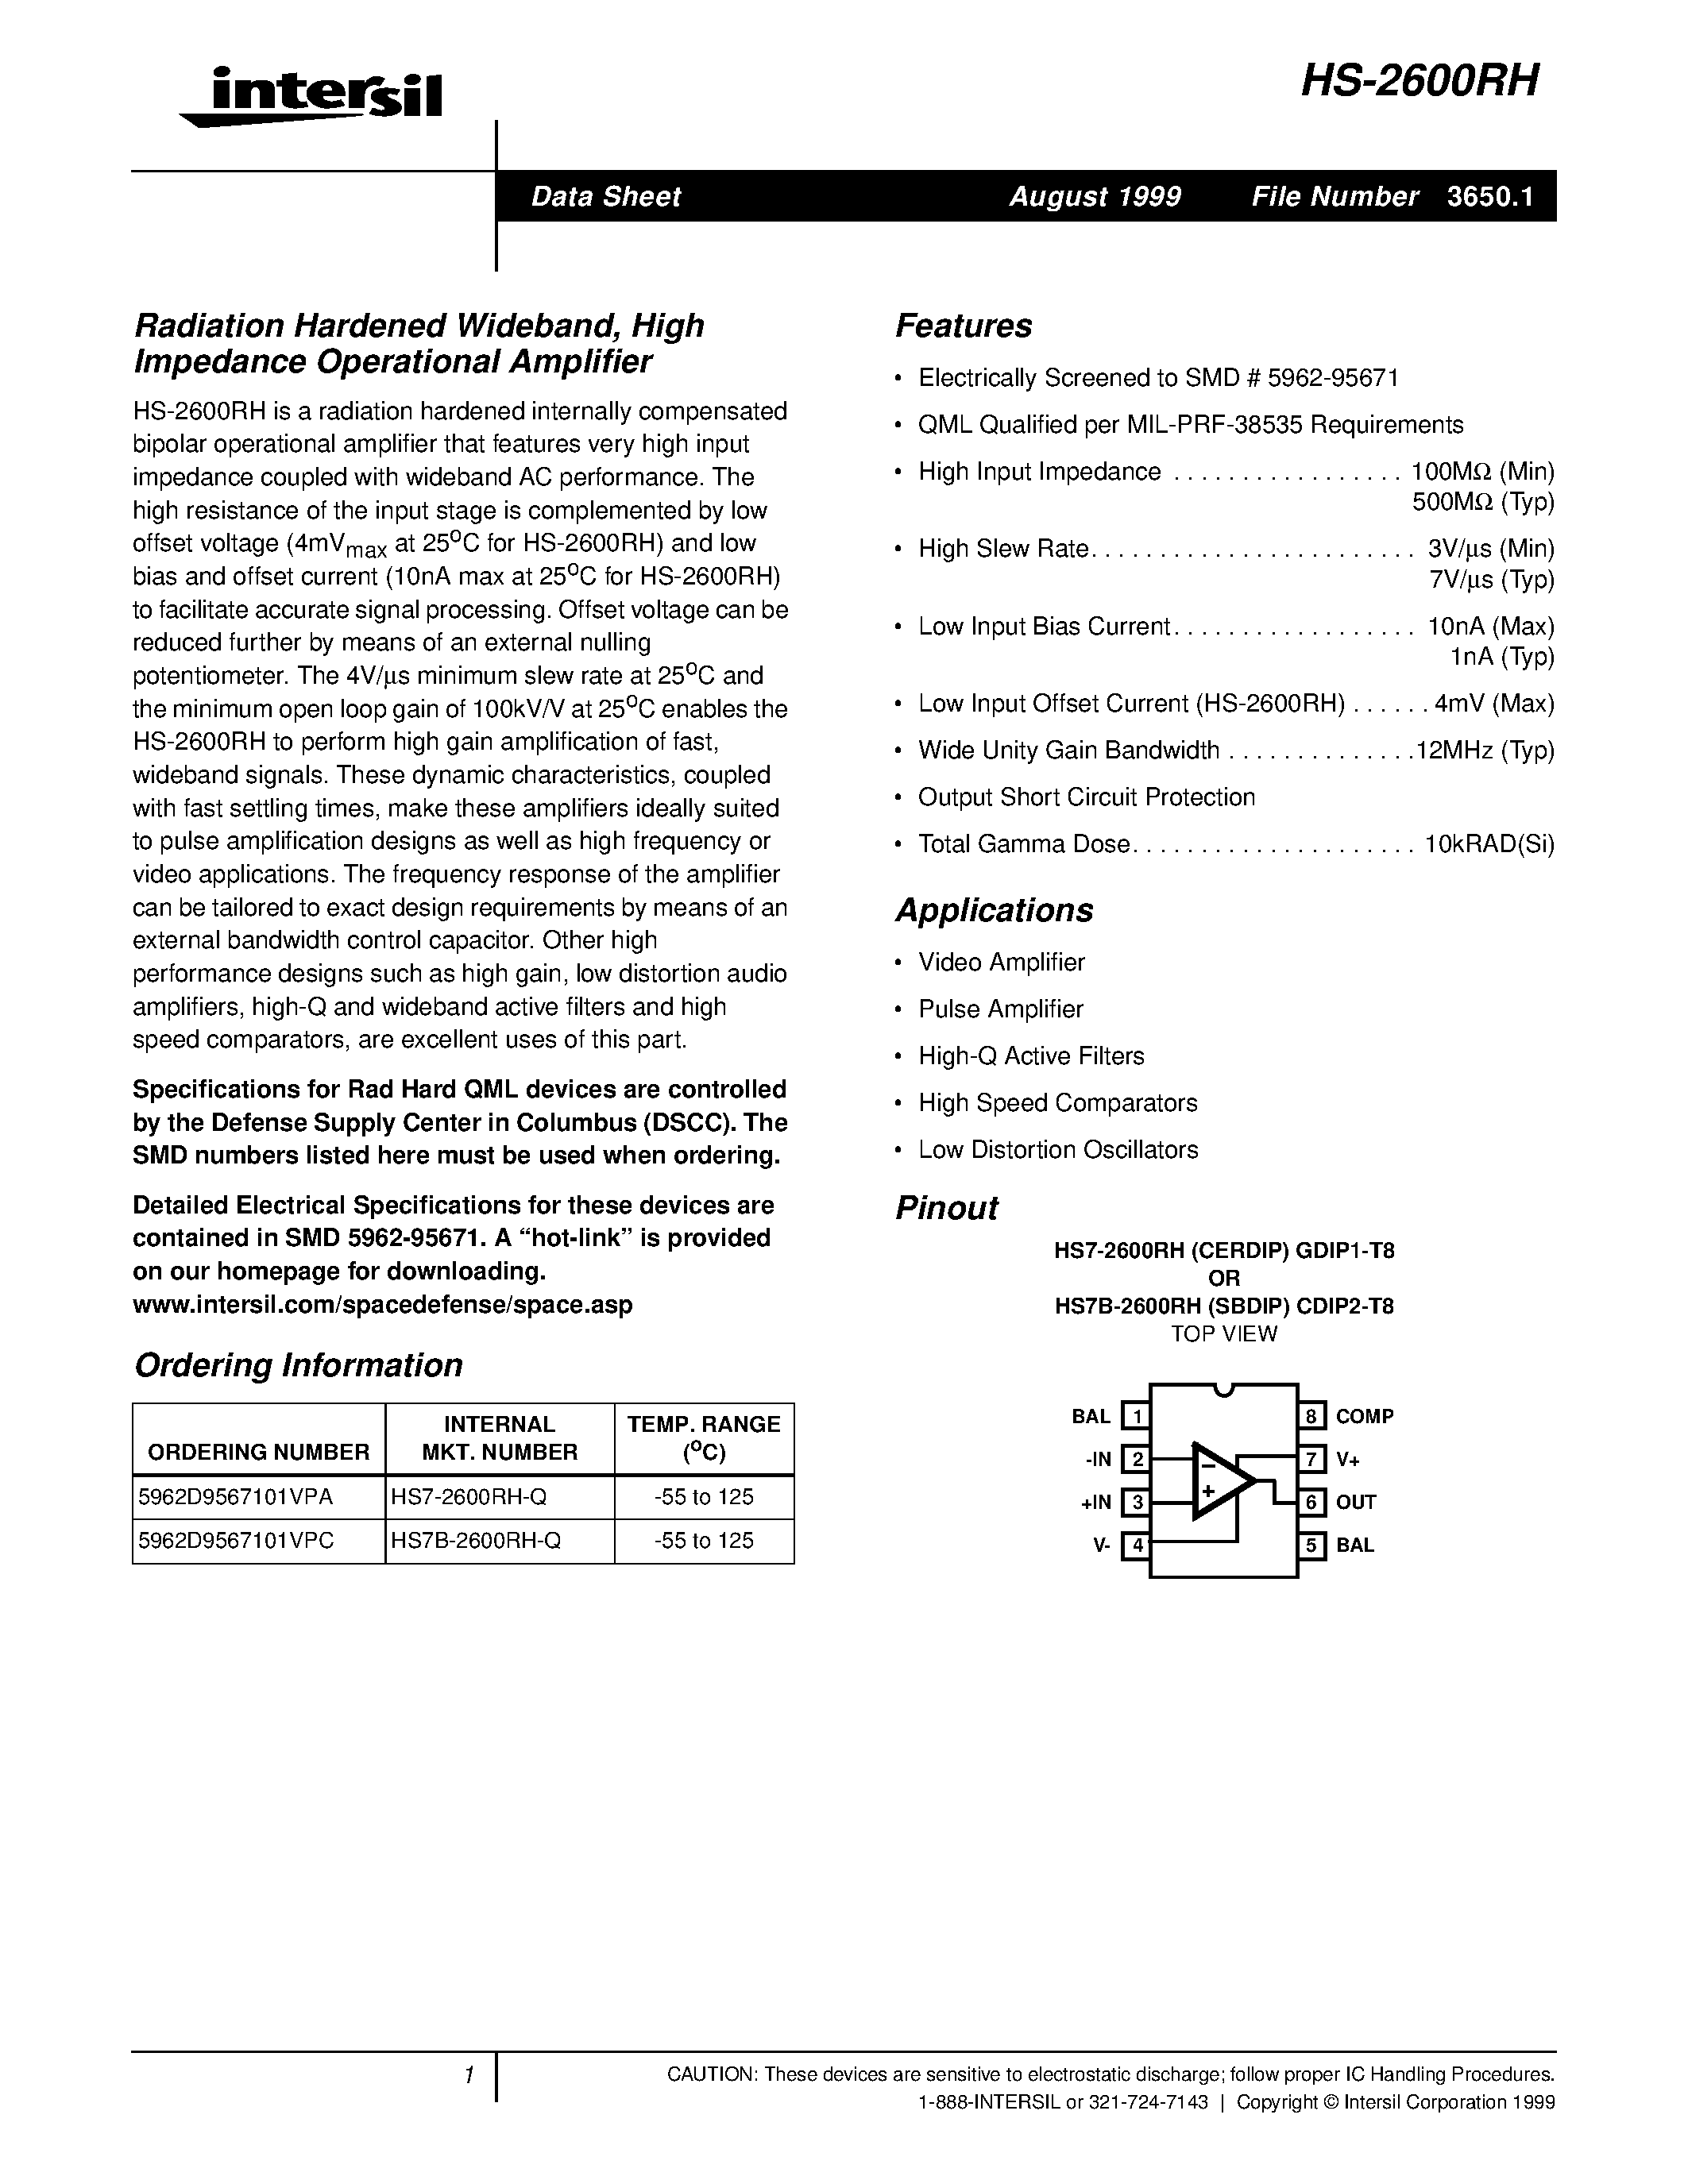 Datasheet HS7-2600RH-Q - Radiation Hardened Wideband/ High Impedance Operational Amplifier page 1